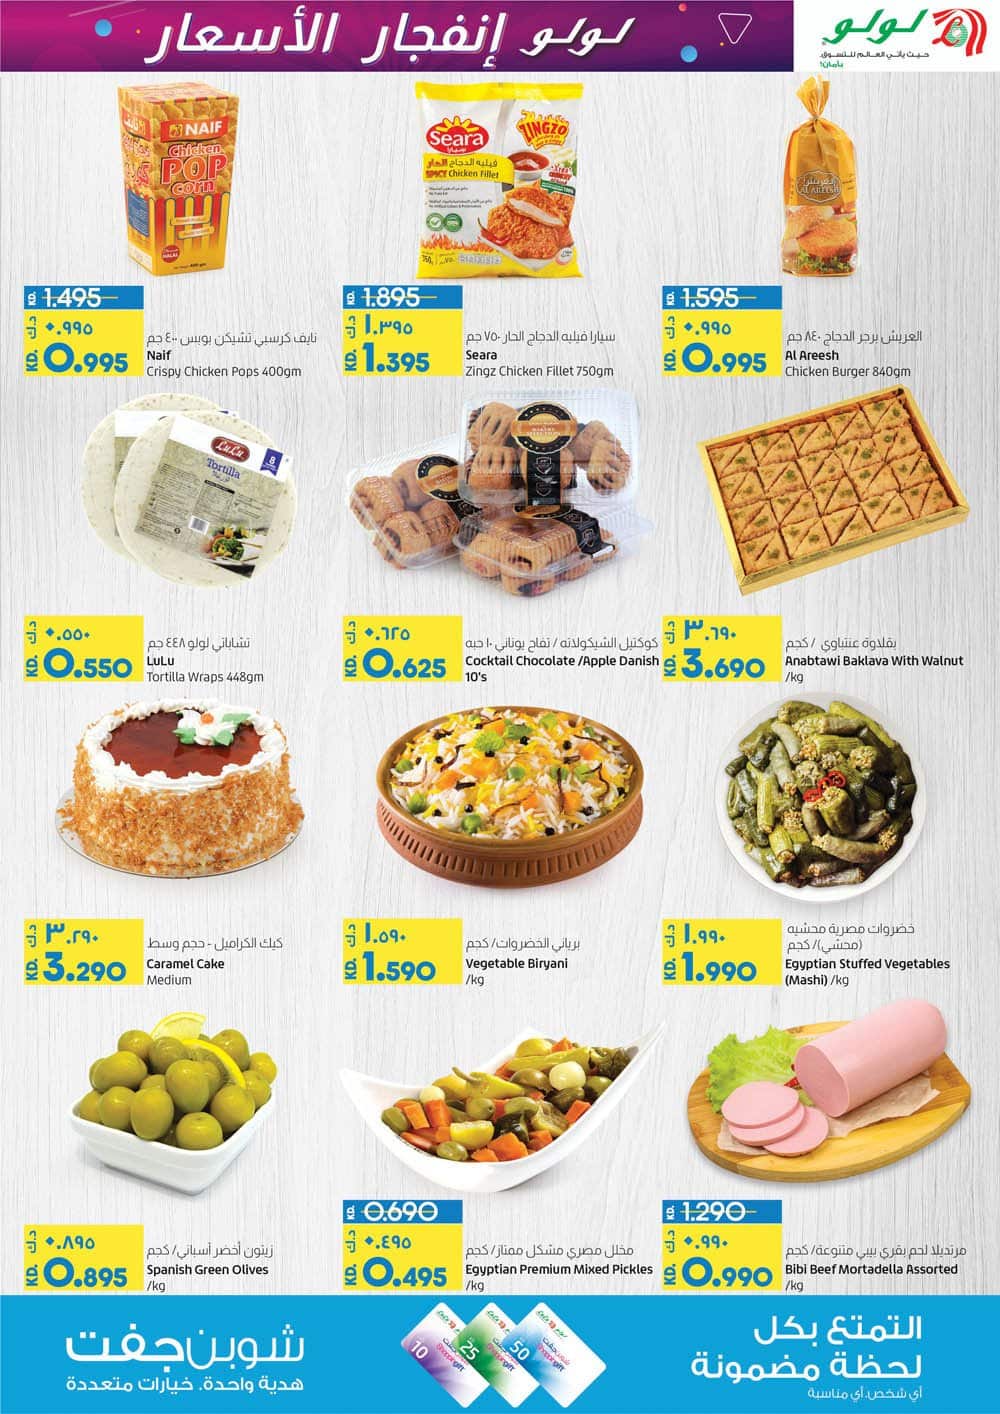 Lulu Hypermarket Price Blast starts till 24th May, iiQ8 offers 7